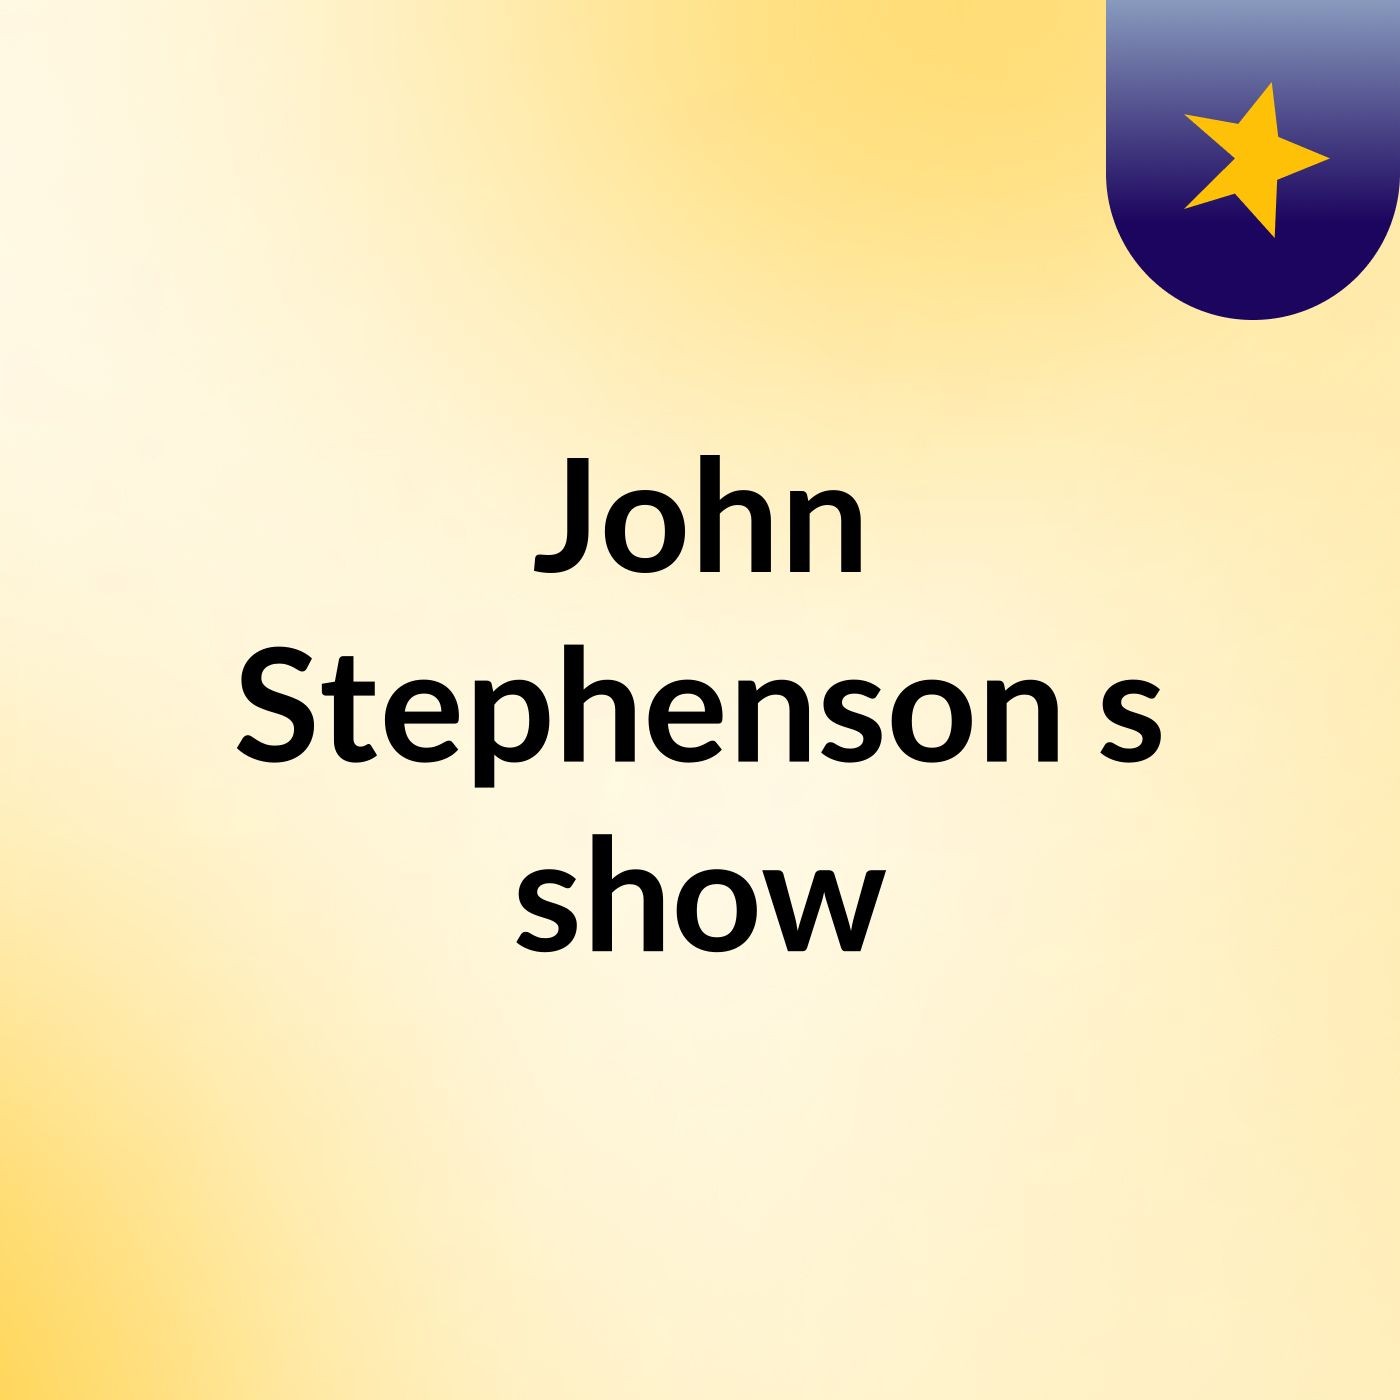 John Stephenson's show